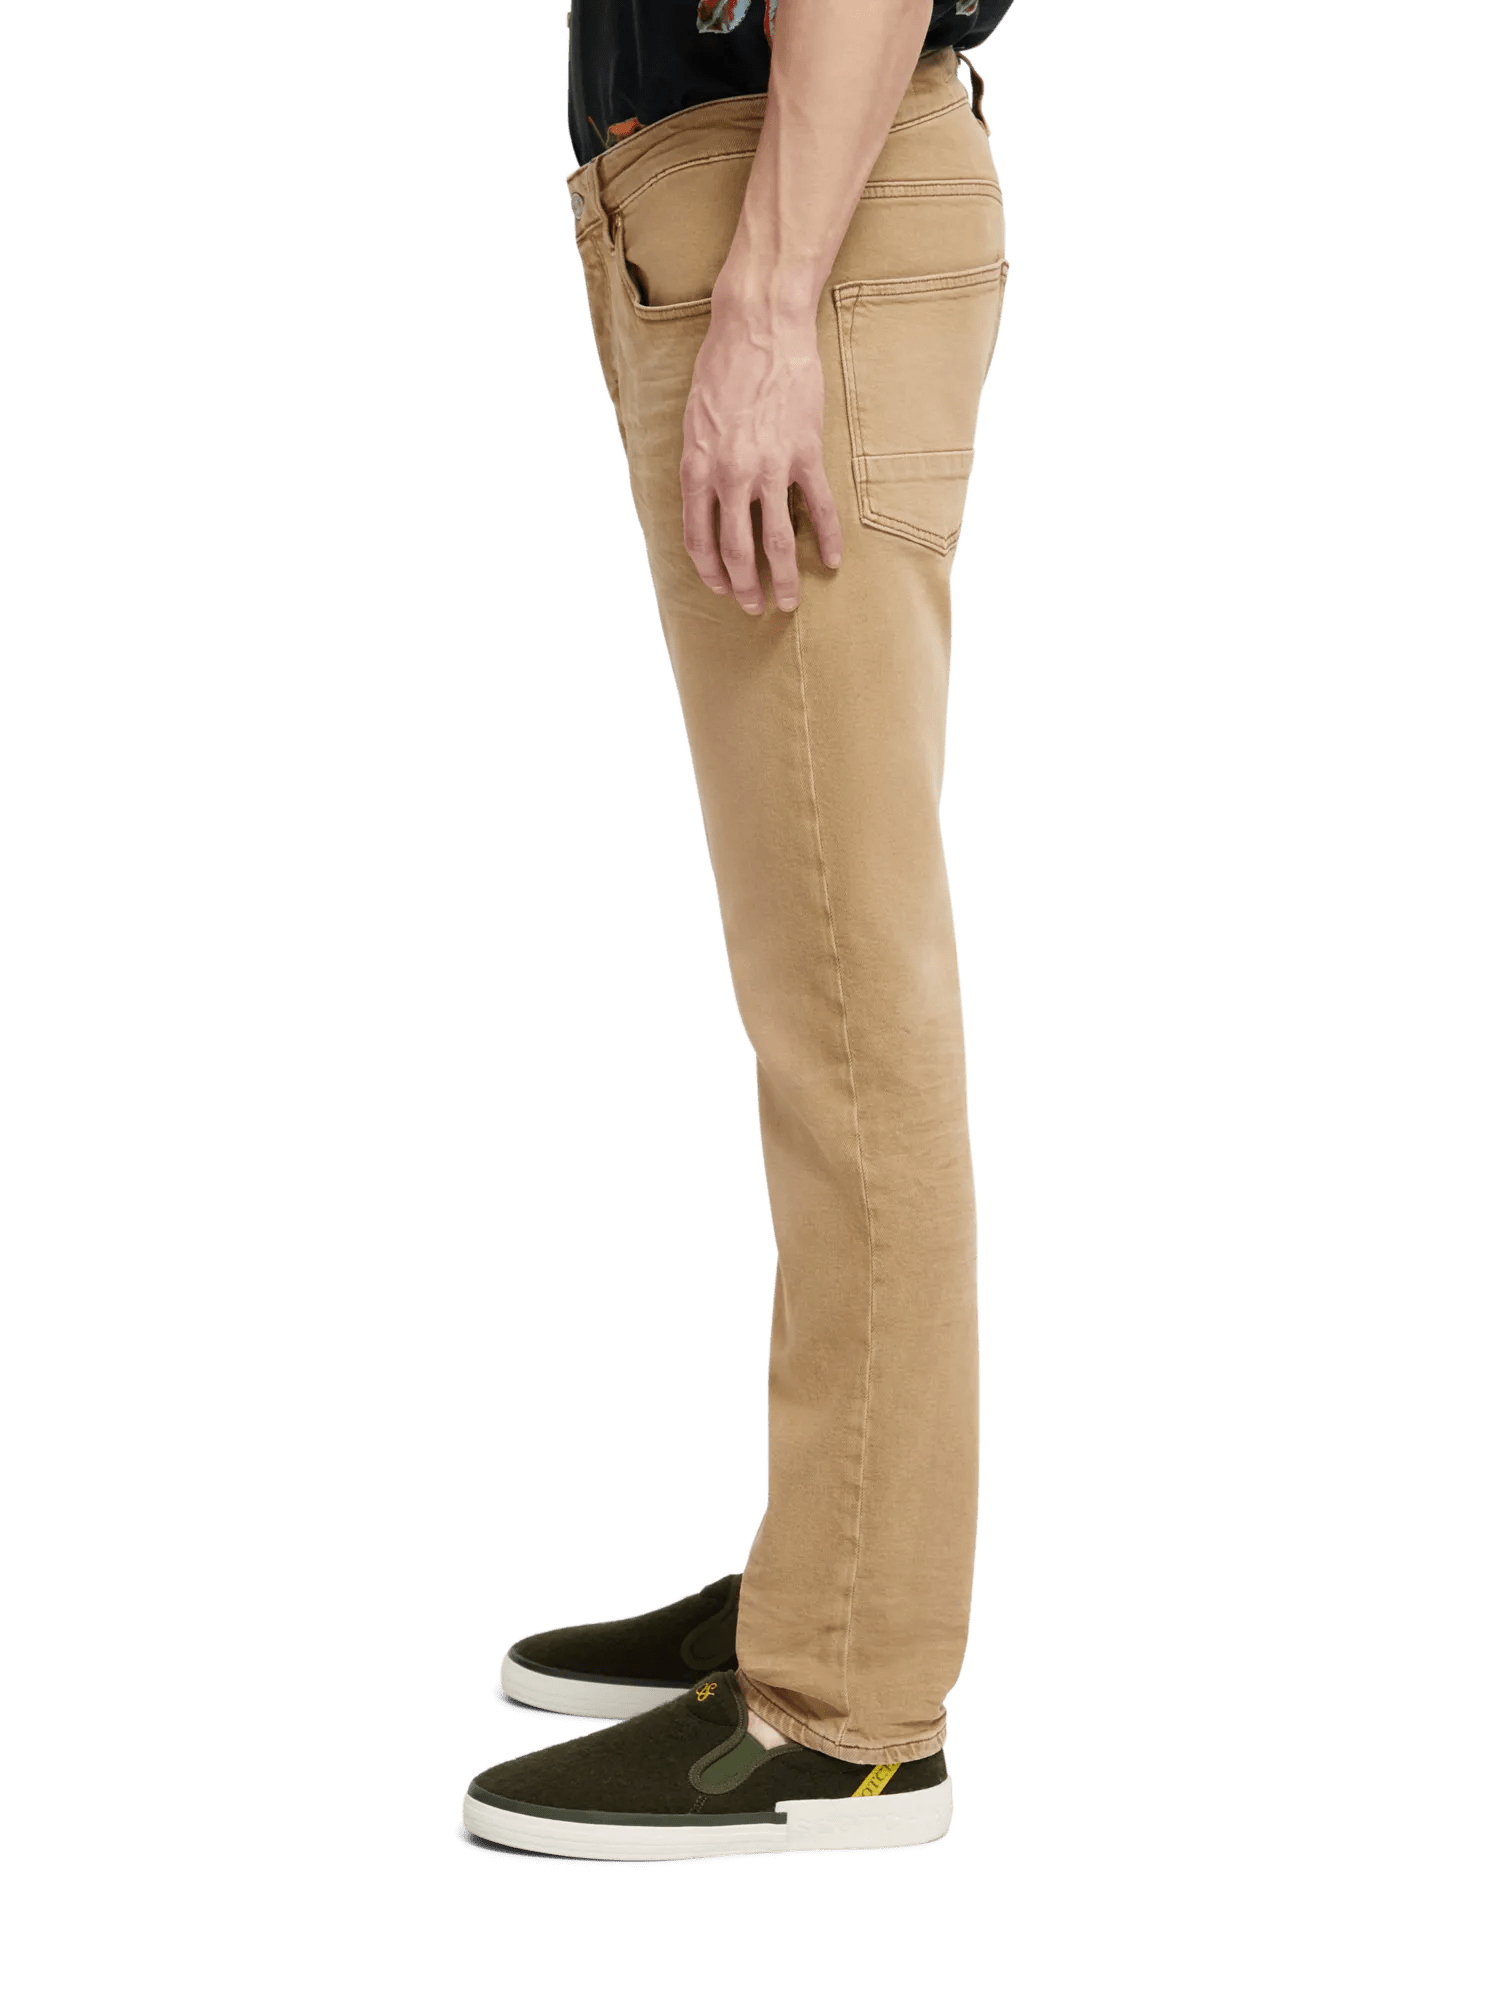 The Ralston regular slim-fit jeans